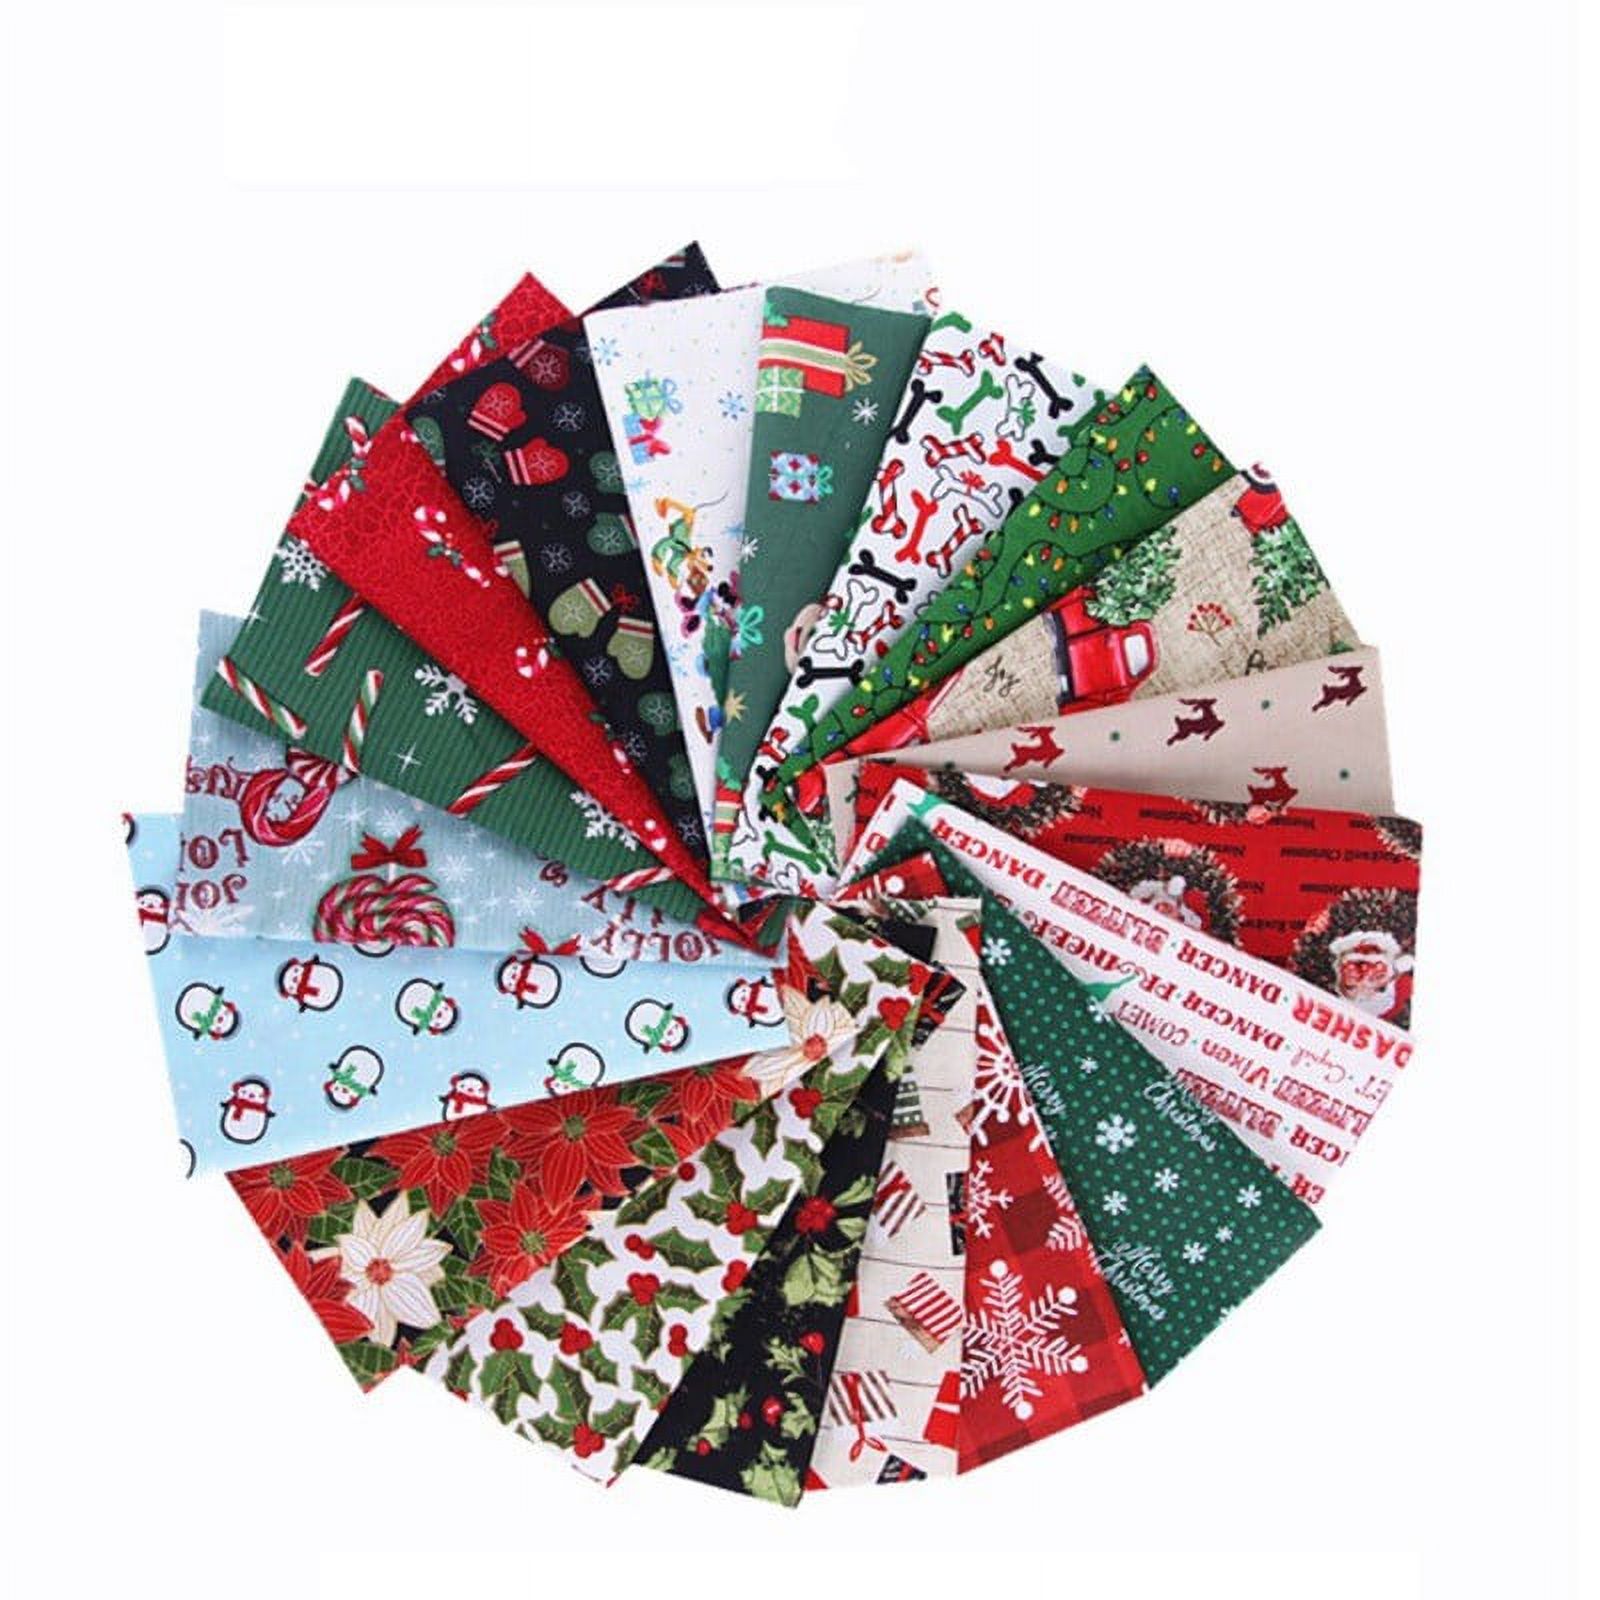 10 Pieces Christmas Cotton Fabric Bundles Sewing Square Patchwork